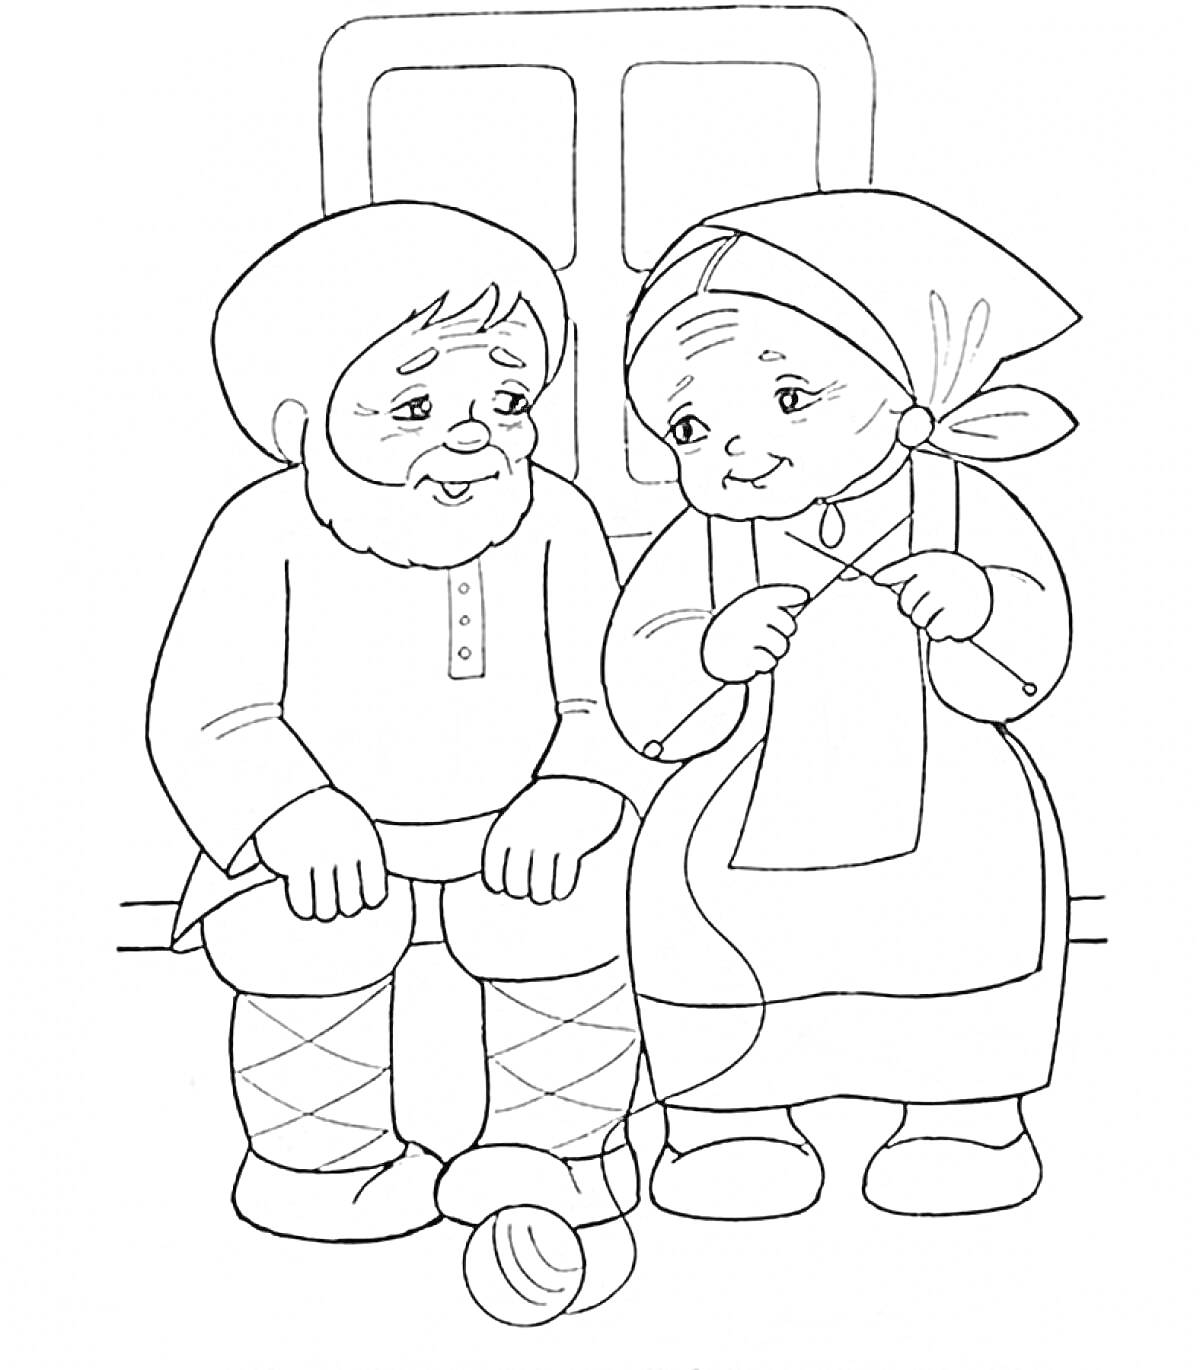 Раскраска Дед и бабушка сидят на скамейке, держа вязание